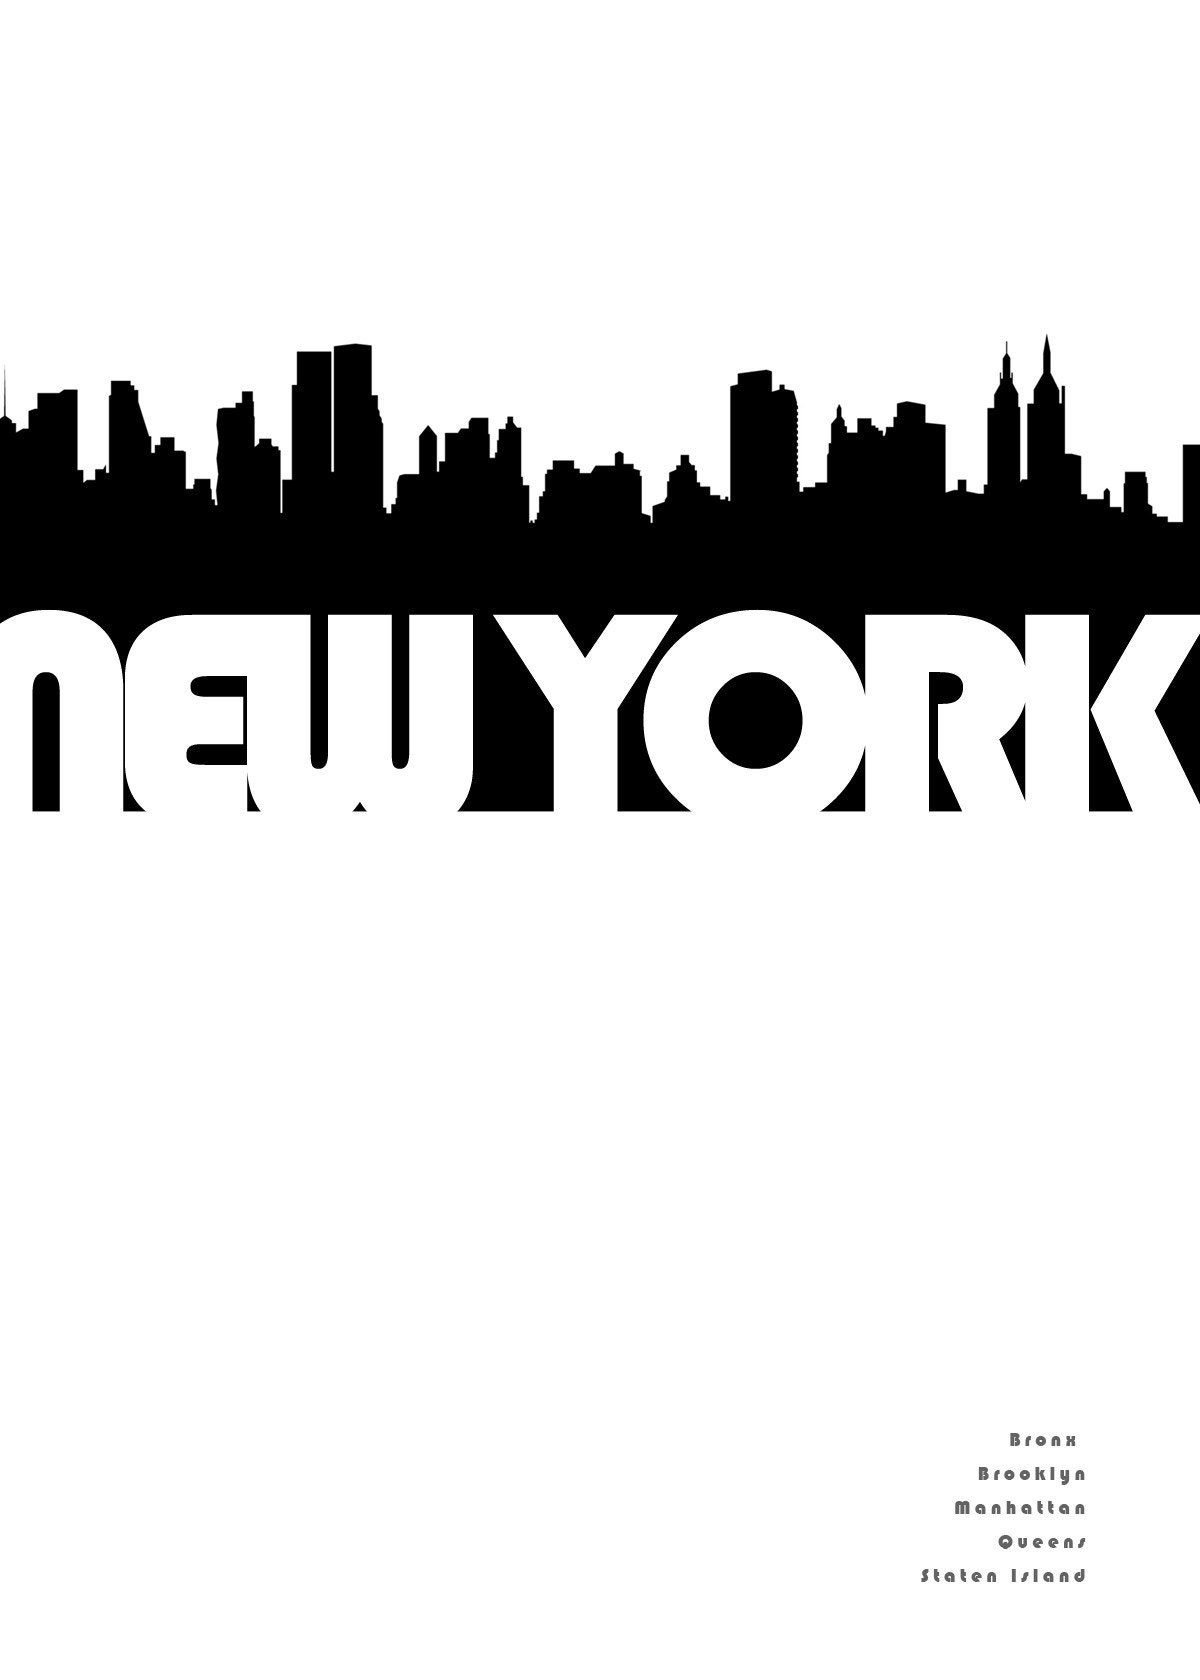 NEW YORK SKYLINE POSTER. Size A2 (42 x 59.4 cm). From ilovedesignlondon